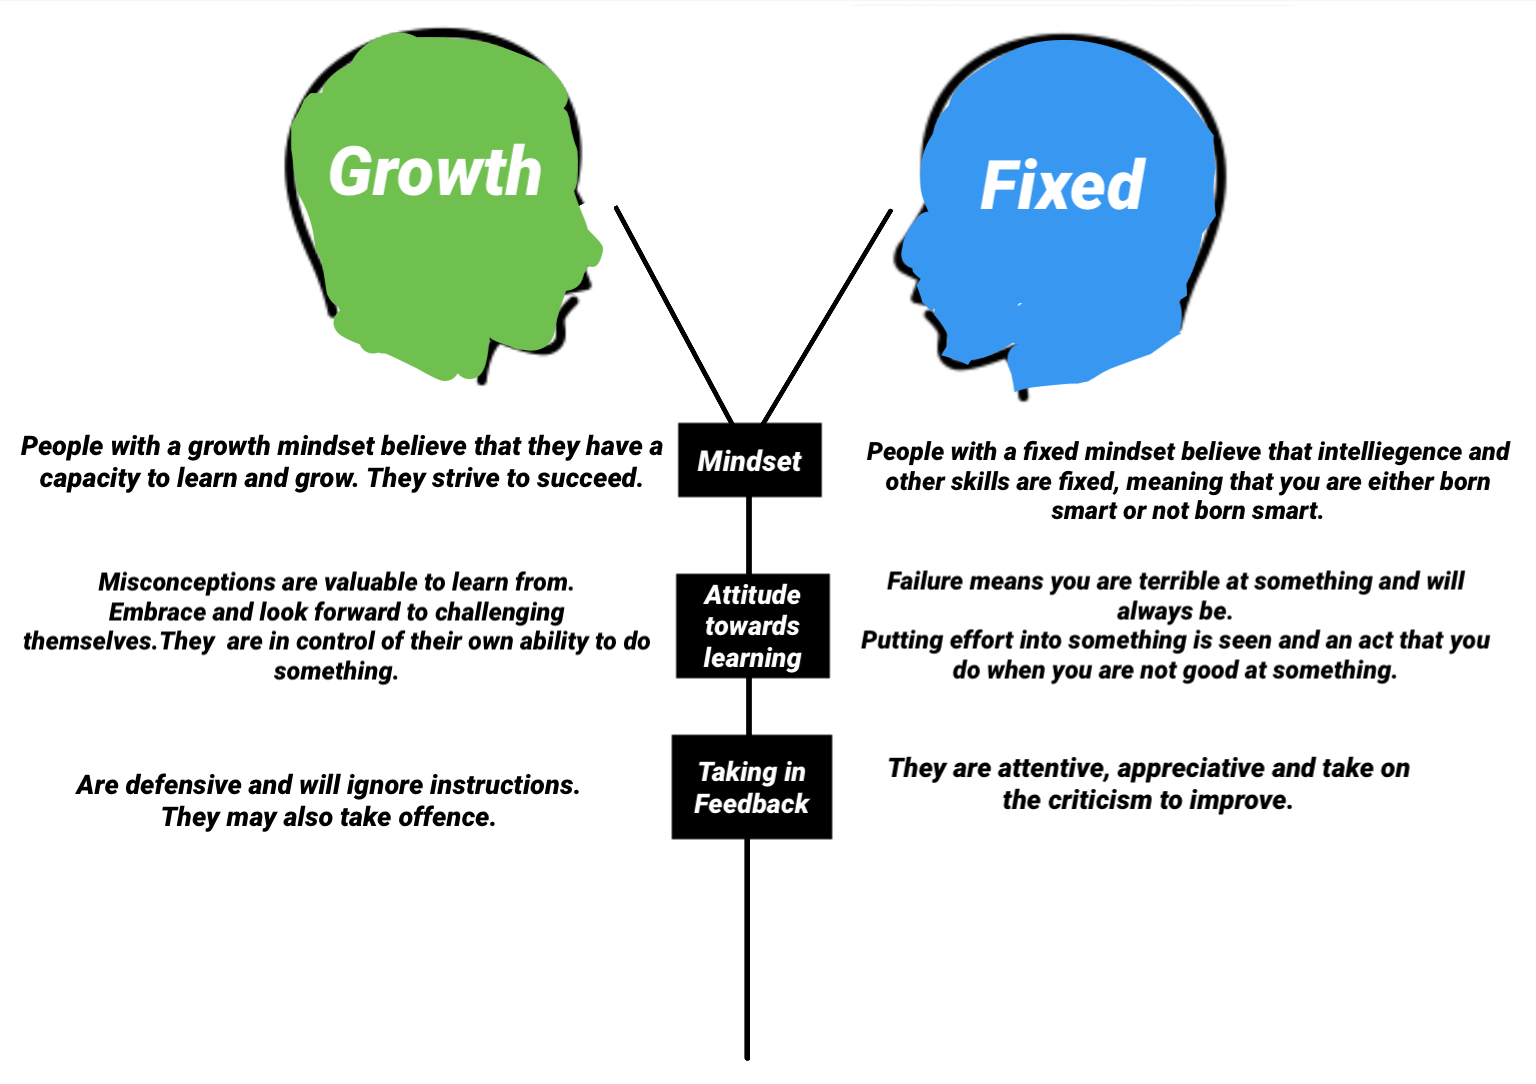 Fixed Mindset vs Growth Mindset